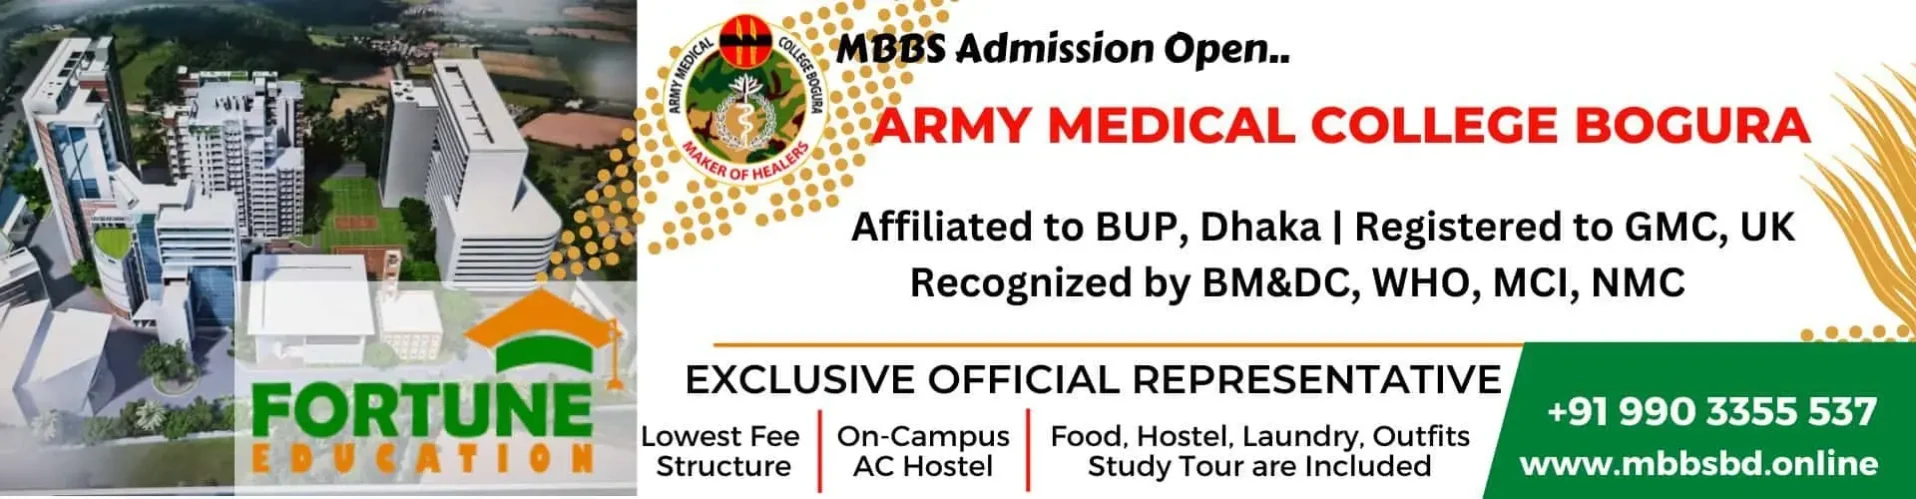 Army Medical College Bogura Banner